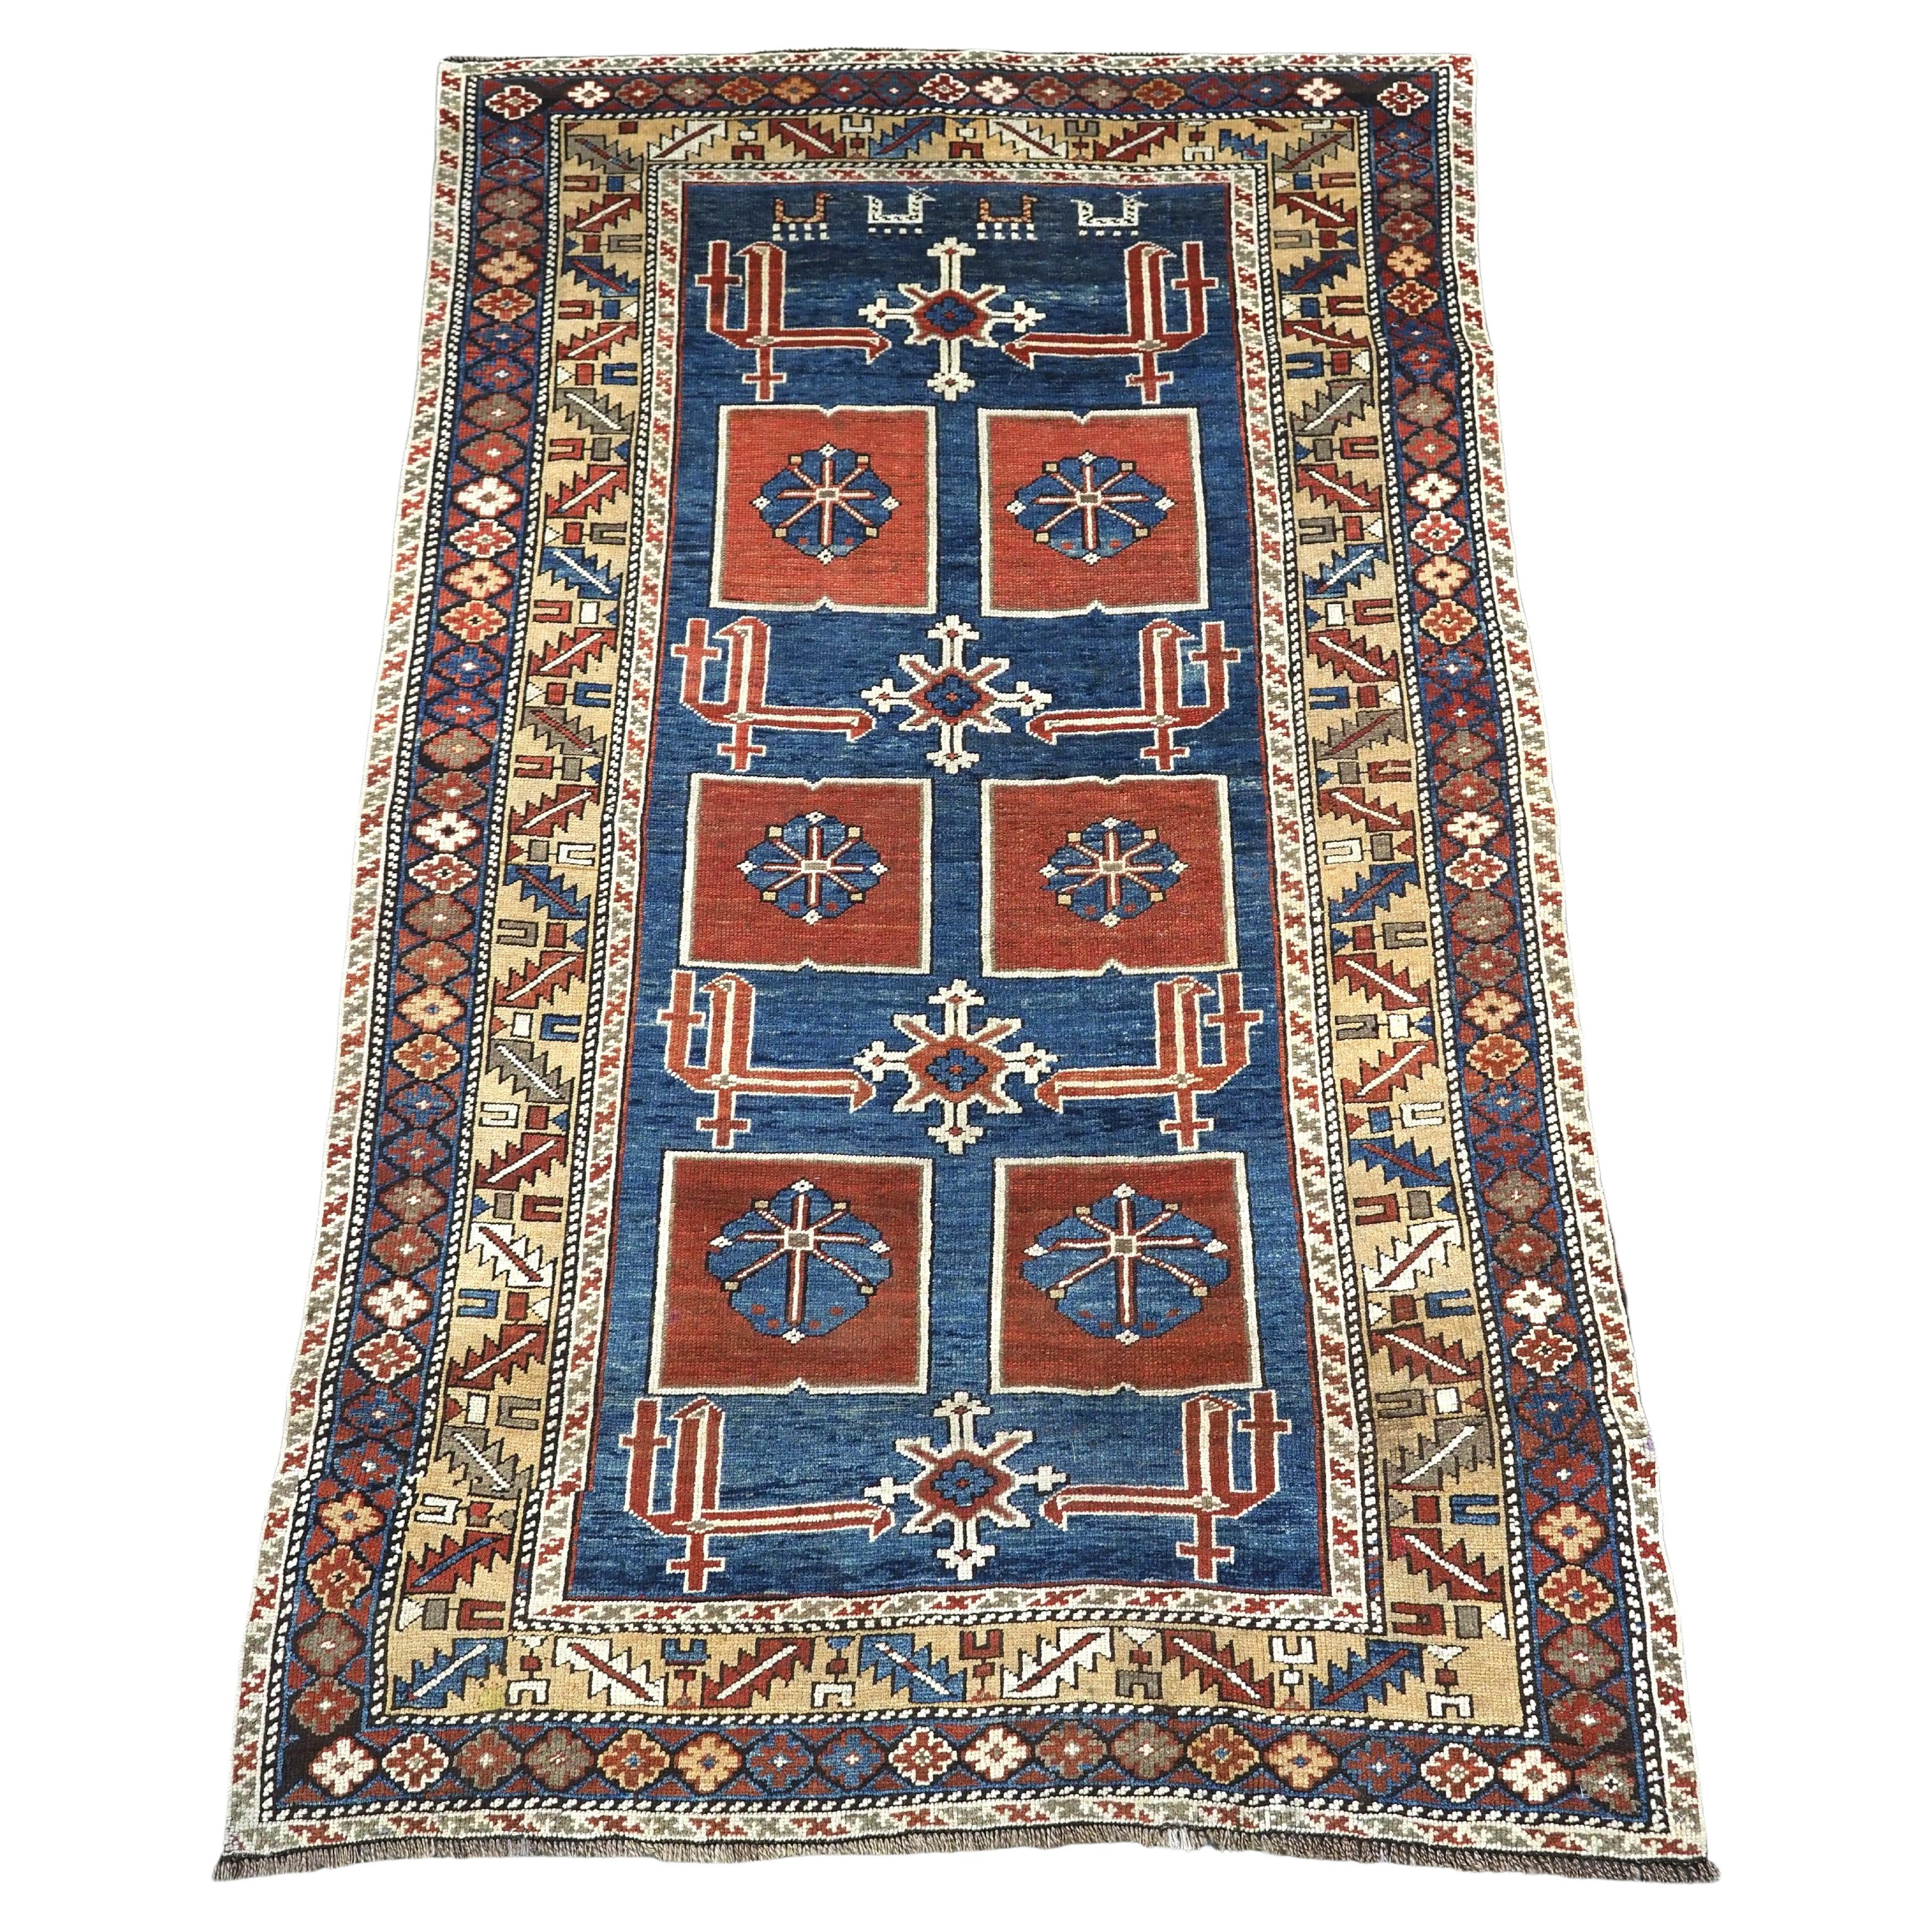 Antique Caucasian Kuba rug from the village of Karagashli, circa 1880.